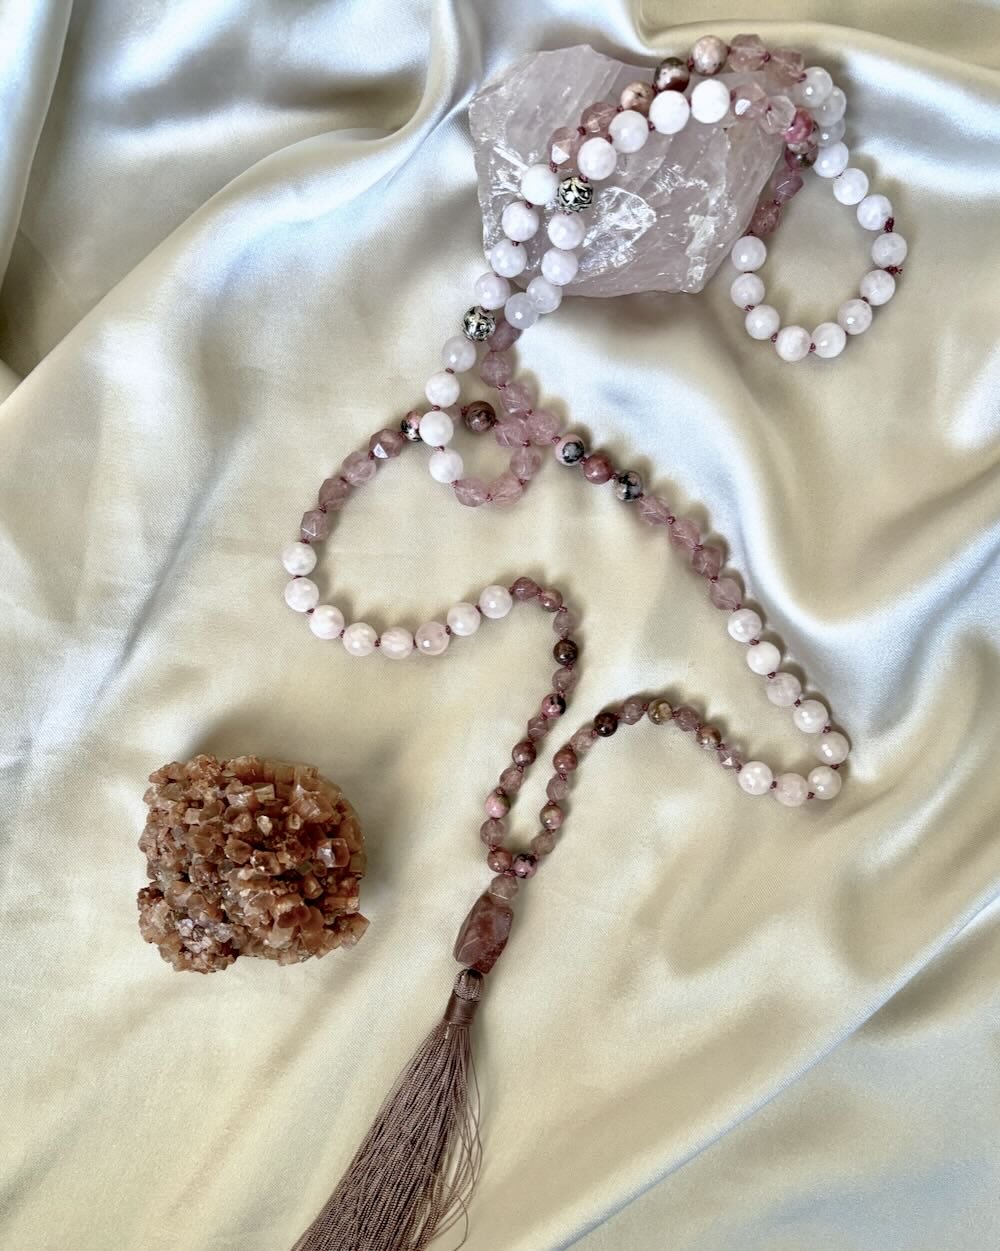 So this is Love Gemstone Mala with Rose Quartz, Pink Rhodochrosite and Strawberry Quartz beads